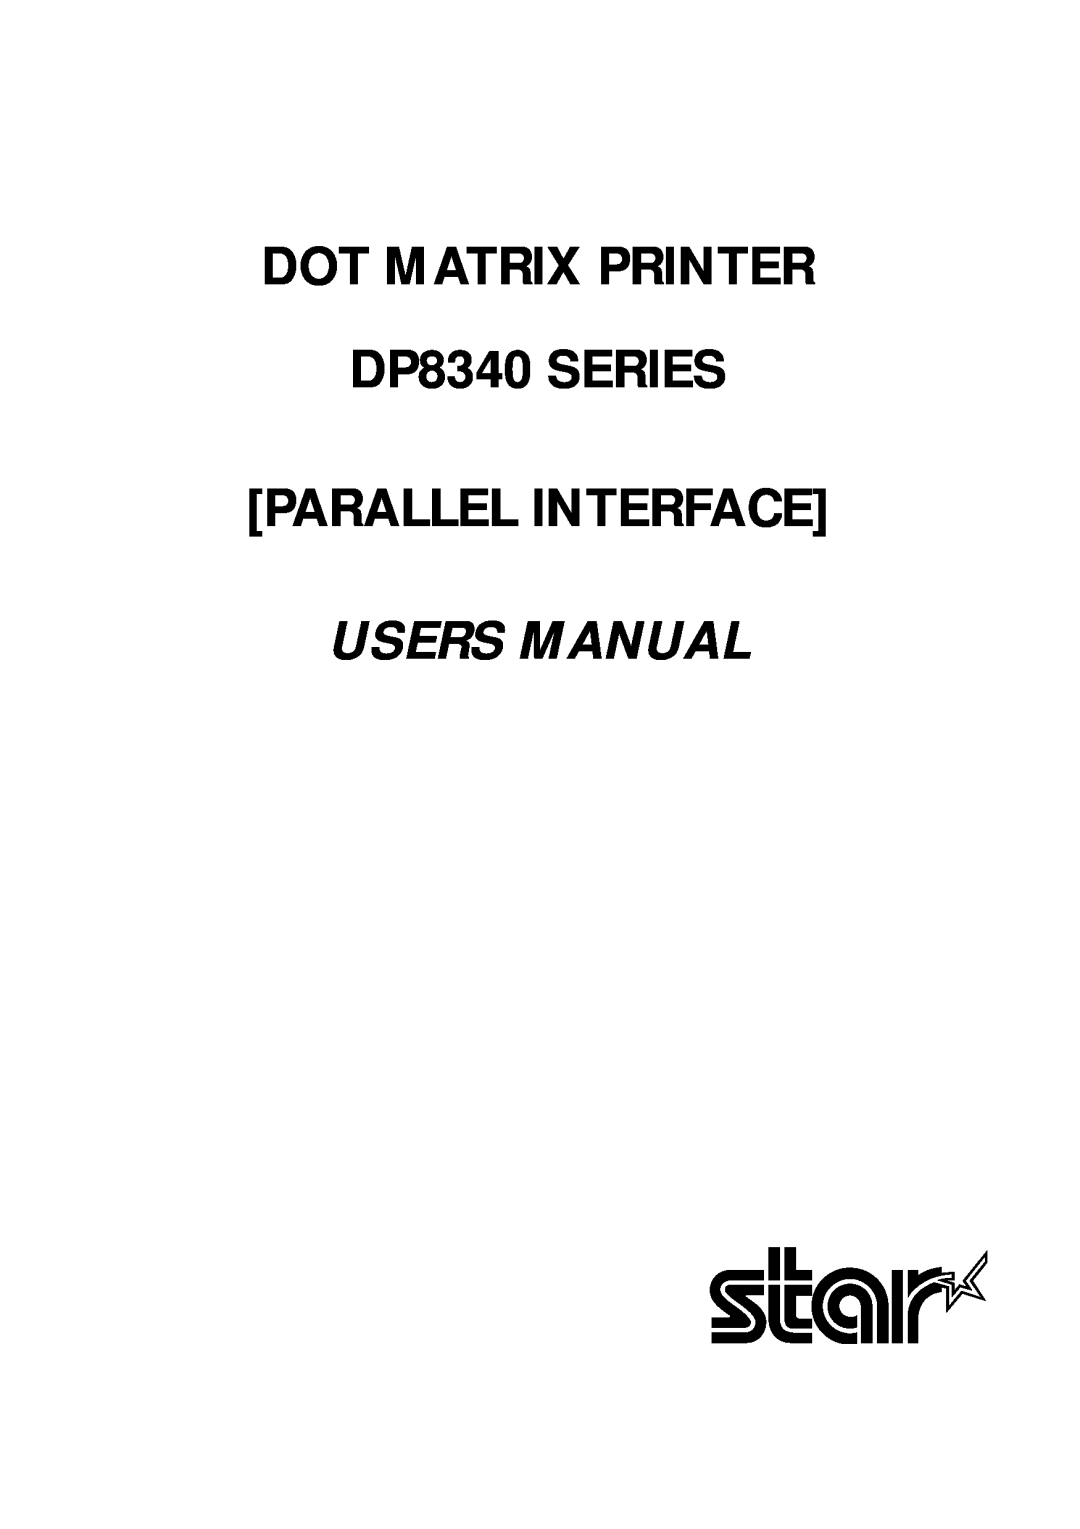 Star Micronics user manual DOT MATRIX PRINTER DP8340 SERIES PARALLEL INTERFACE 